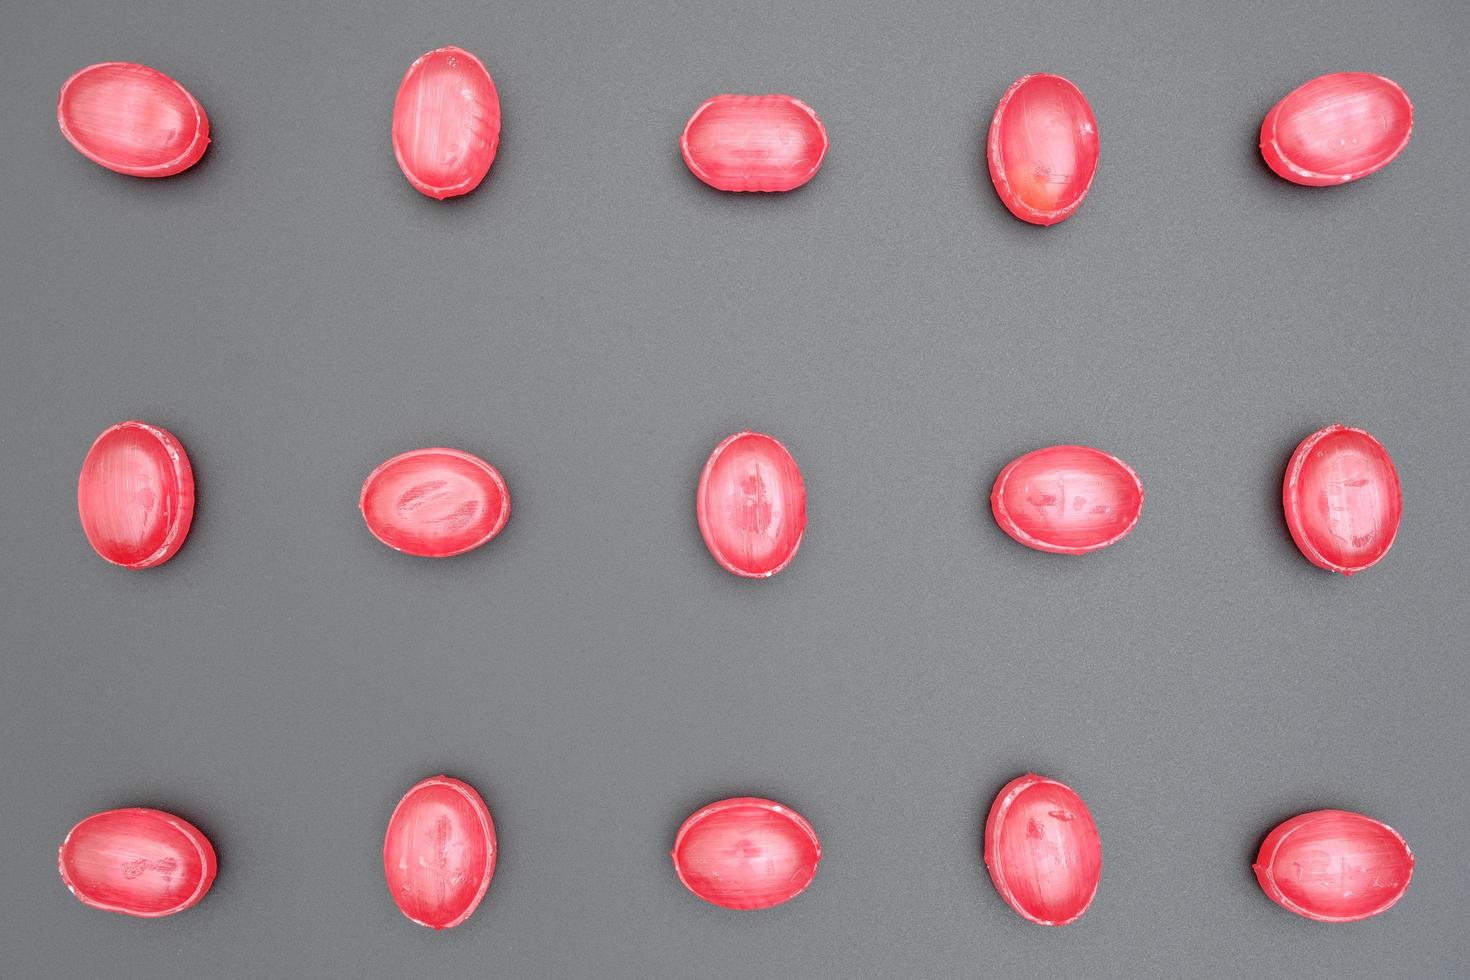 rode ovale vorm glanzend karamel berberis snoep patroon close-up foto